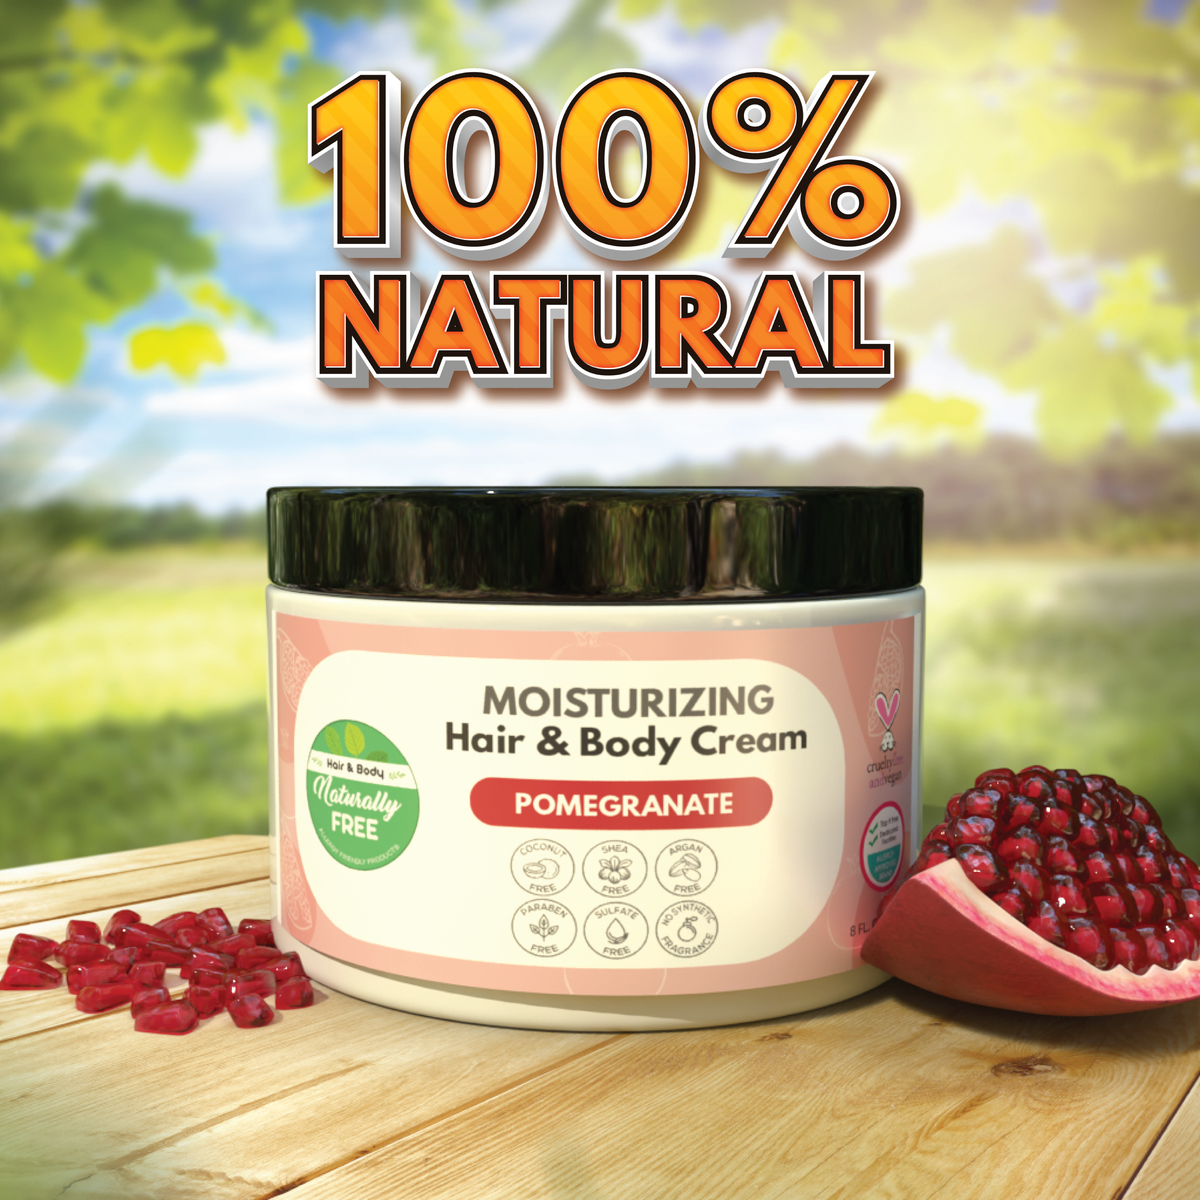 Pomegranate Hair & Body Moisturizer | Hypoallergenic - Allergy Friendly - Naturally Free